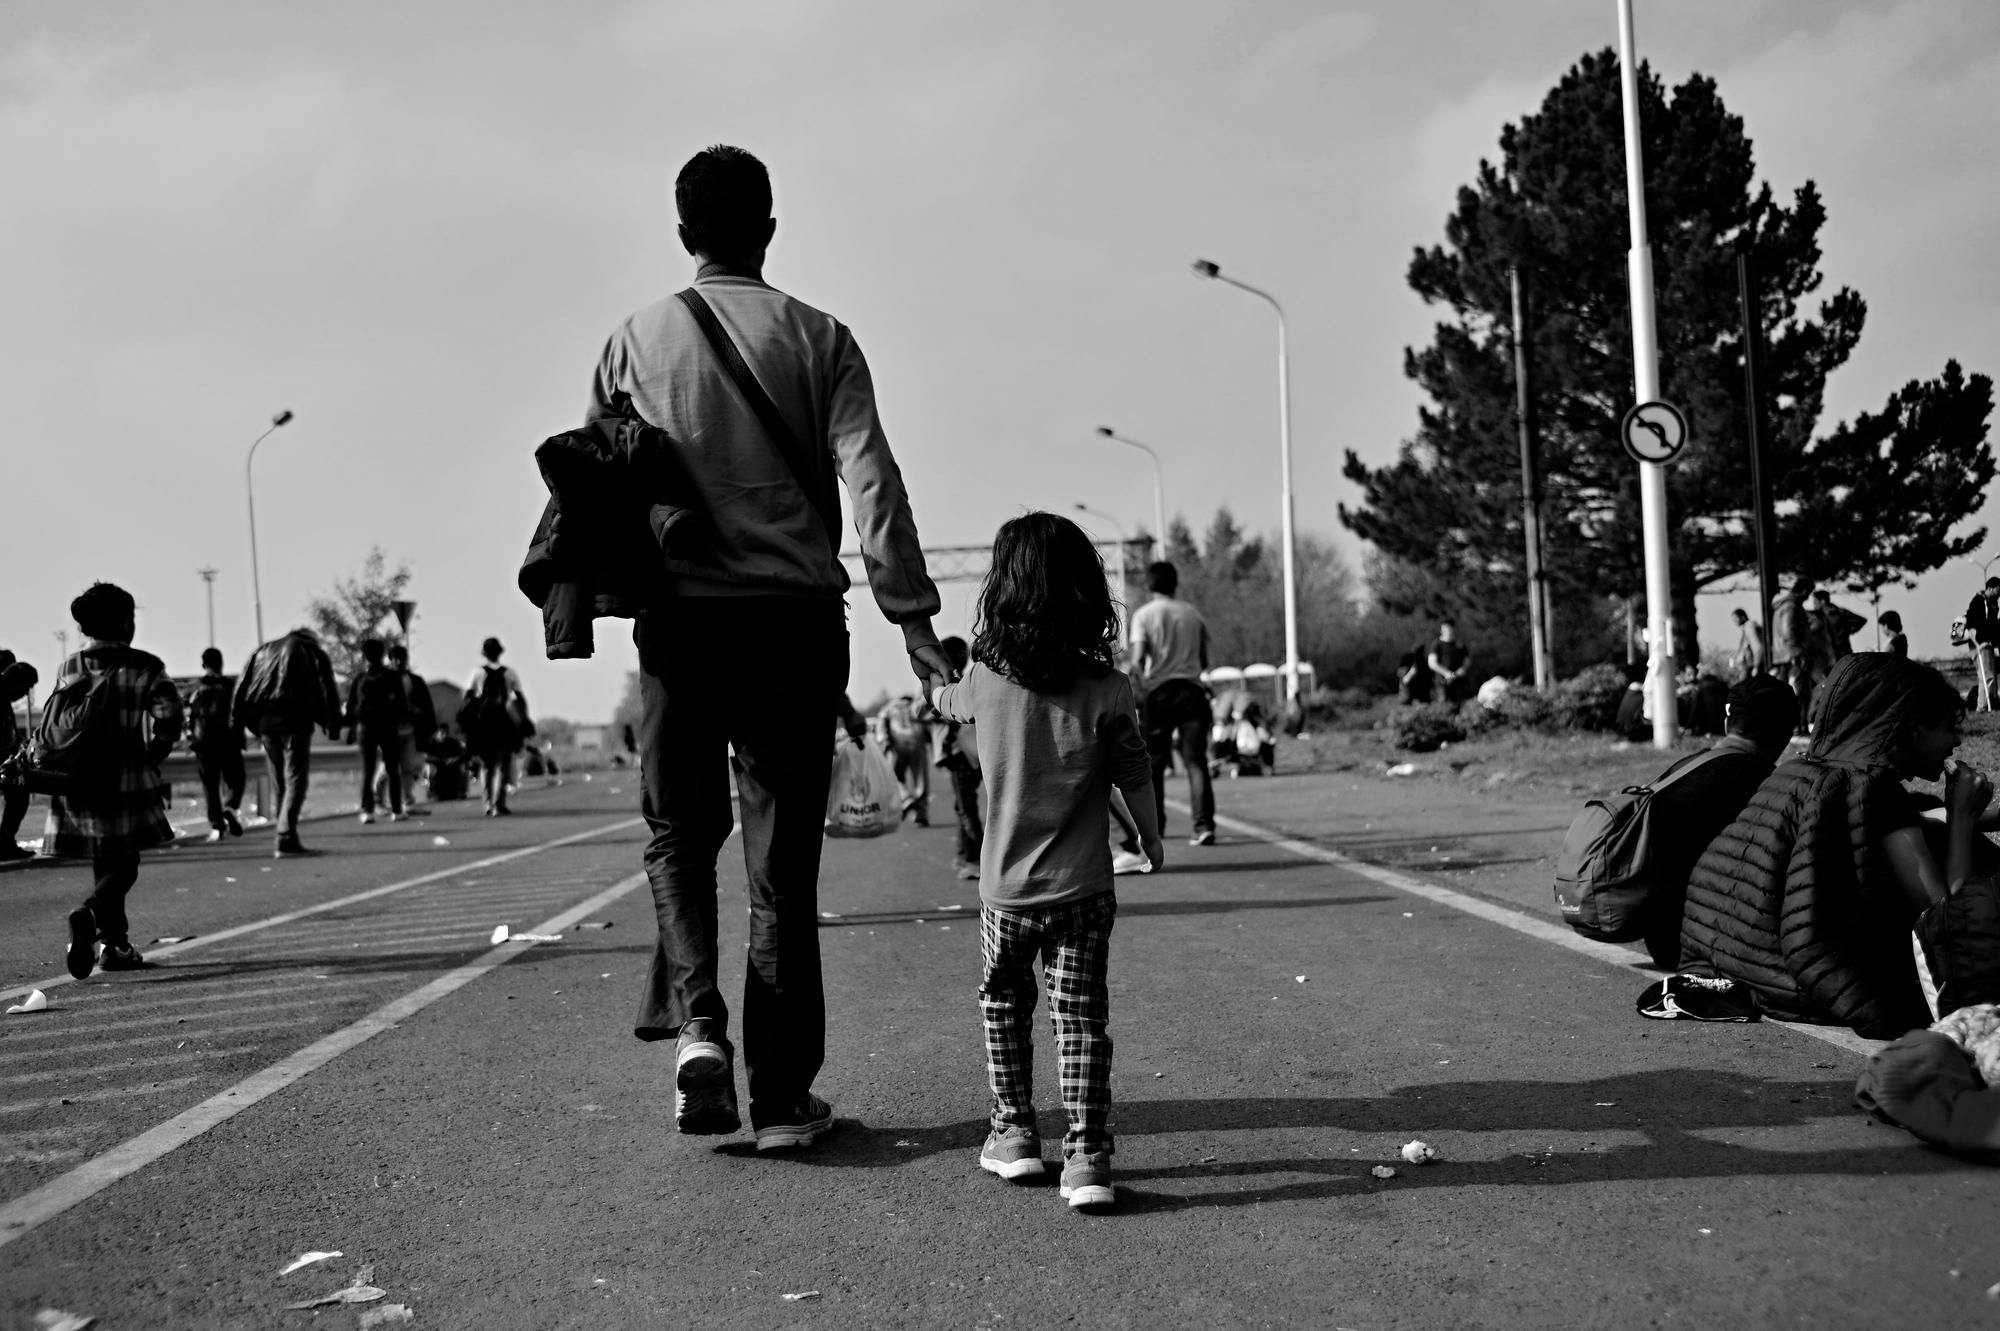 Refugees walking regarding the Roma refugees asylum class action lawsuit settlement 